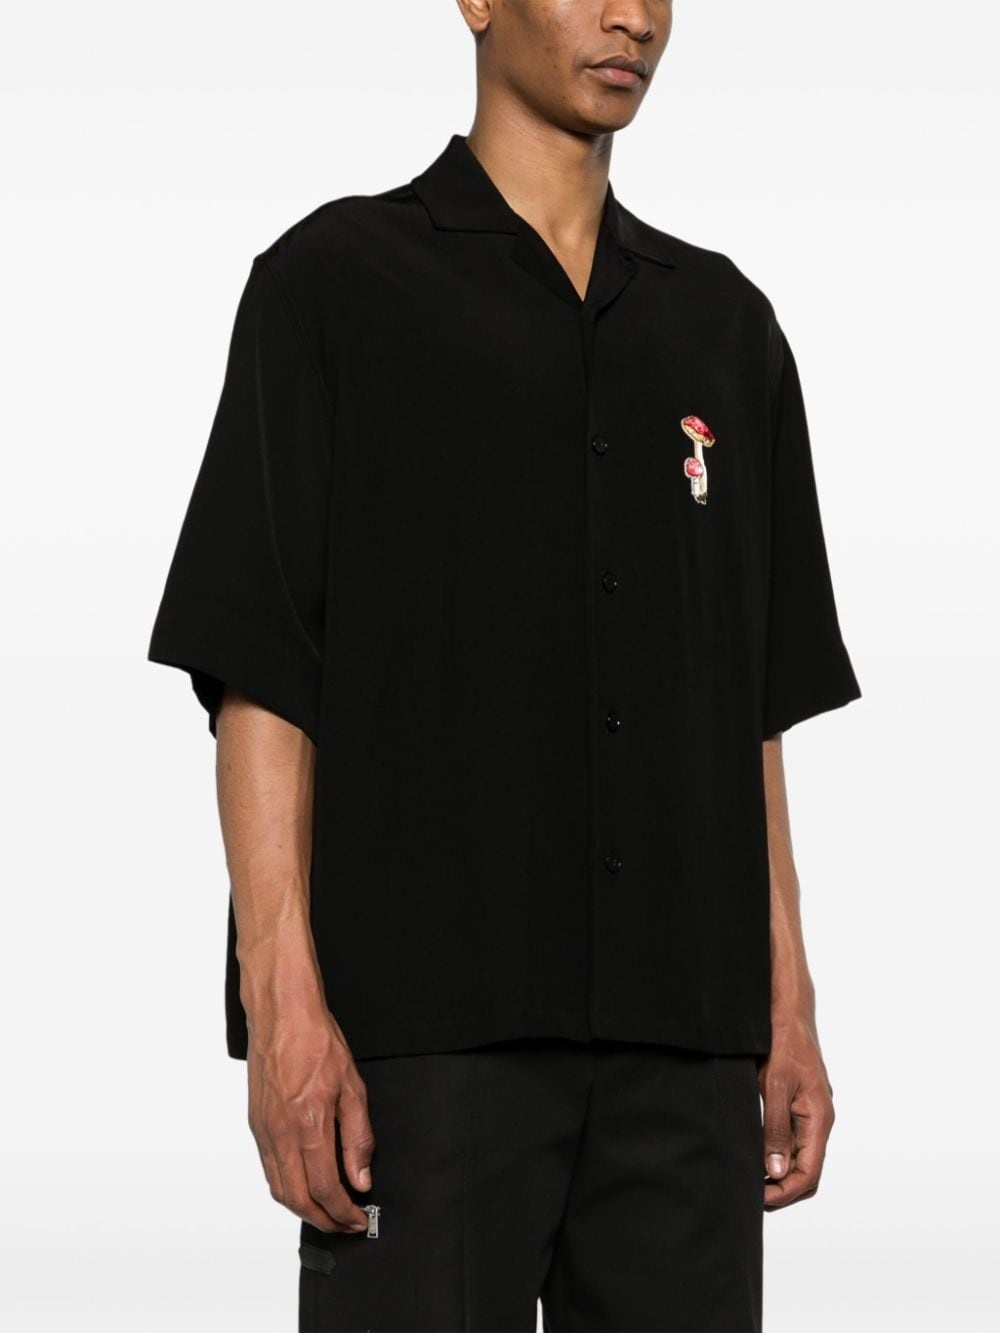 + mushroom-embroidered bowling shirt - 3